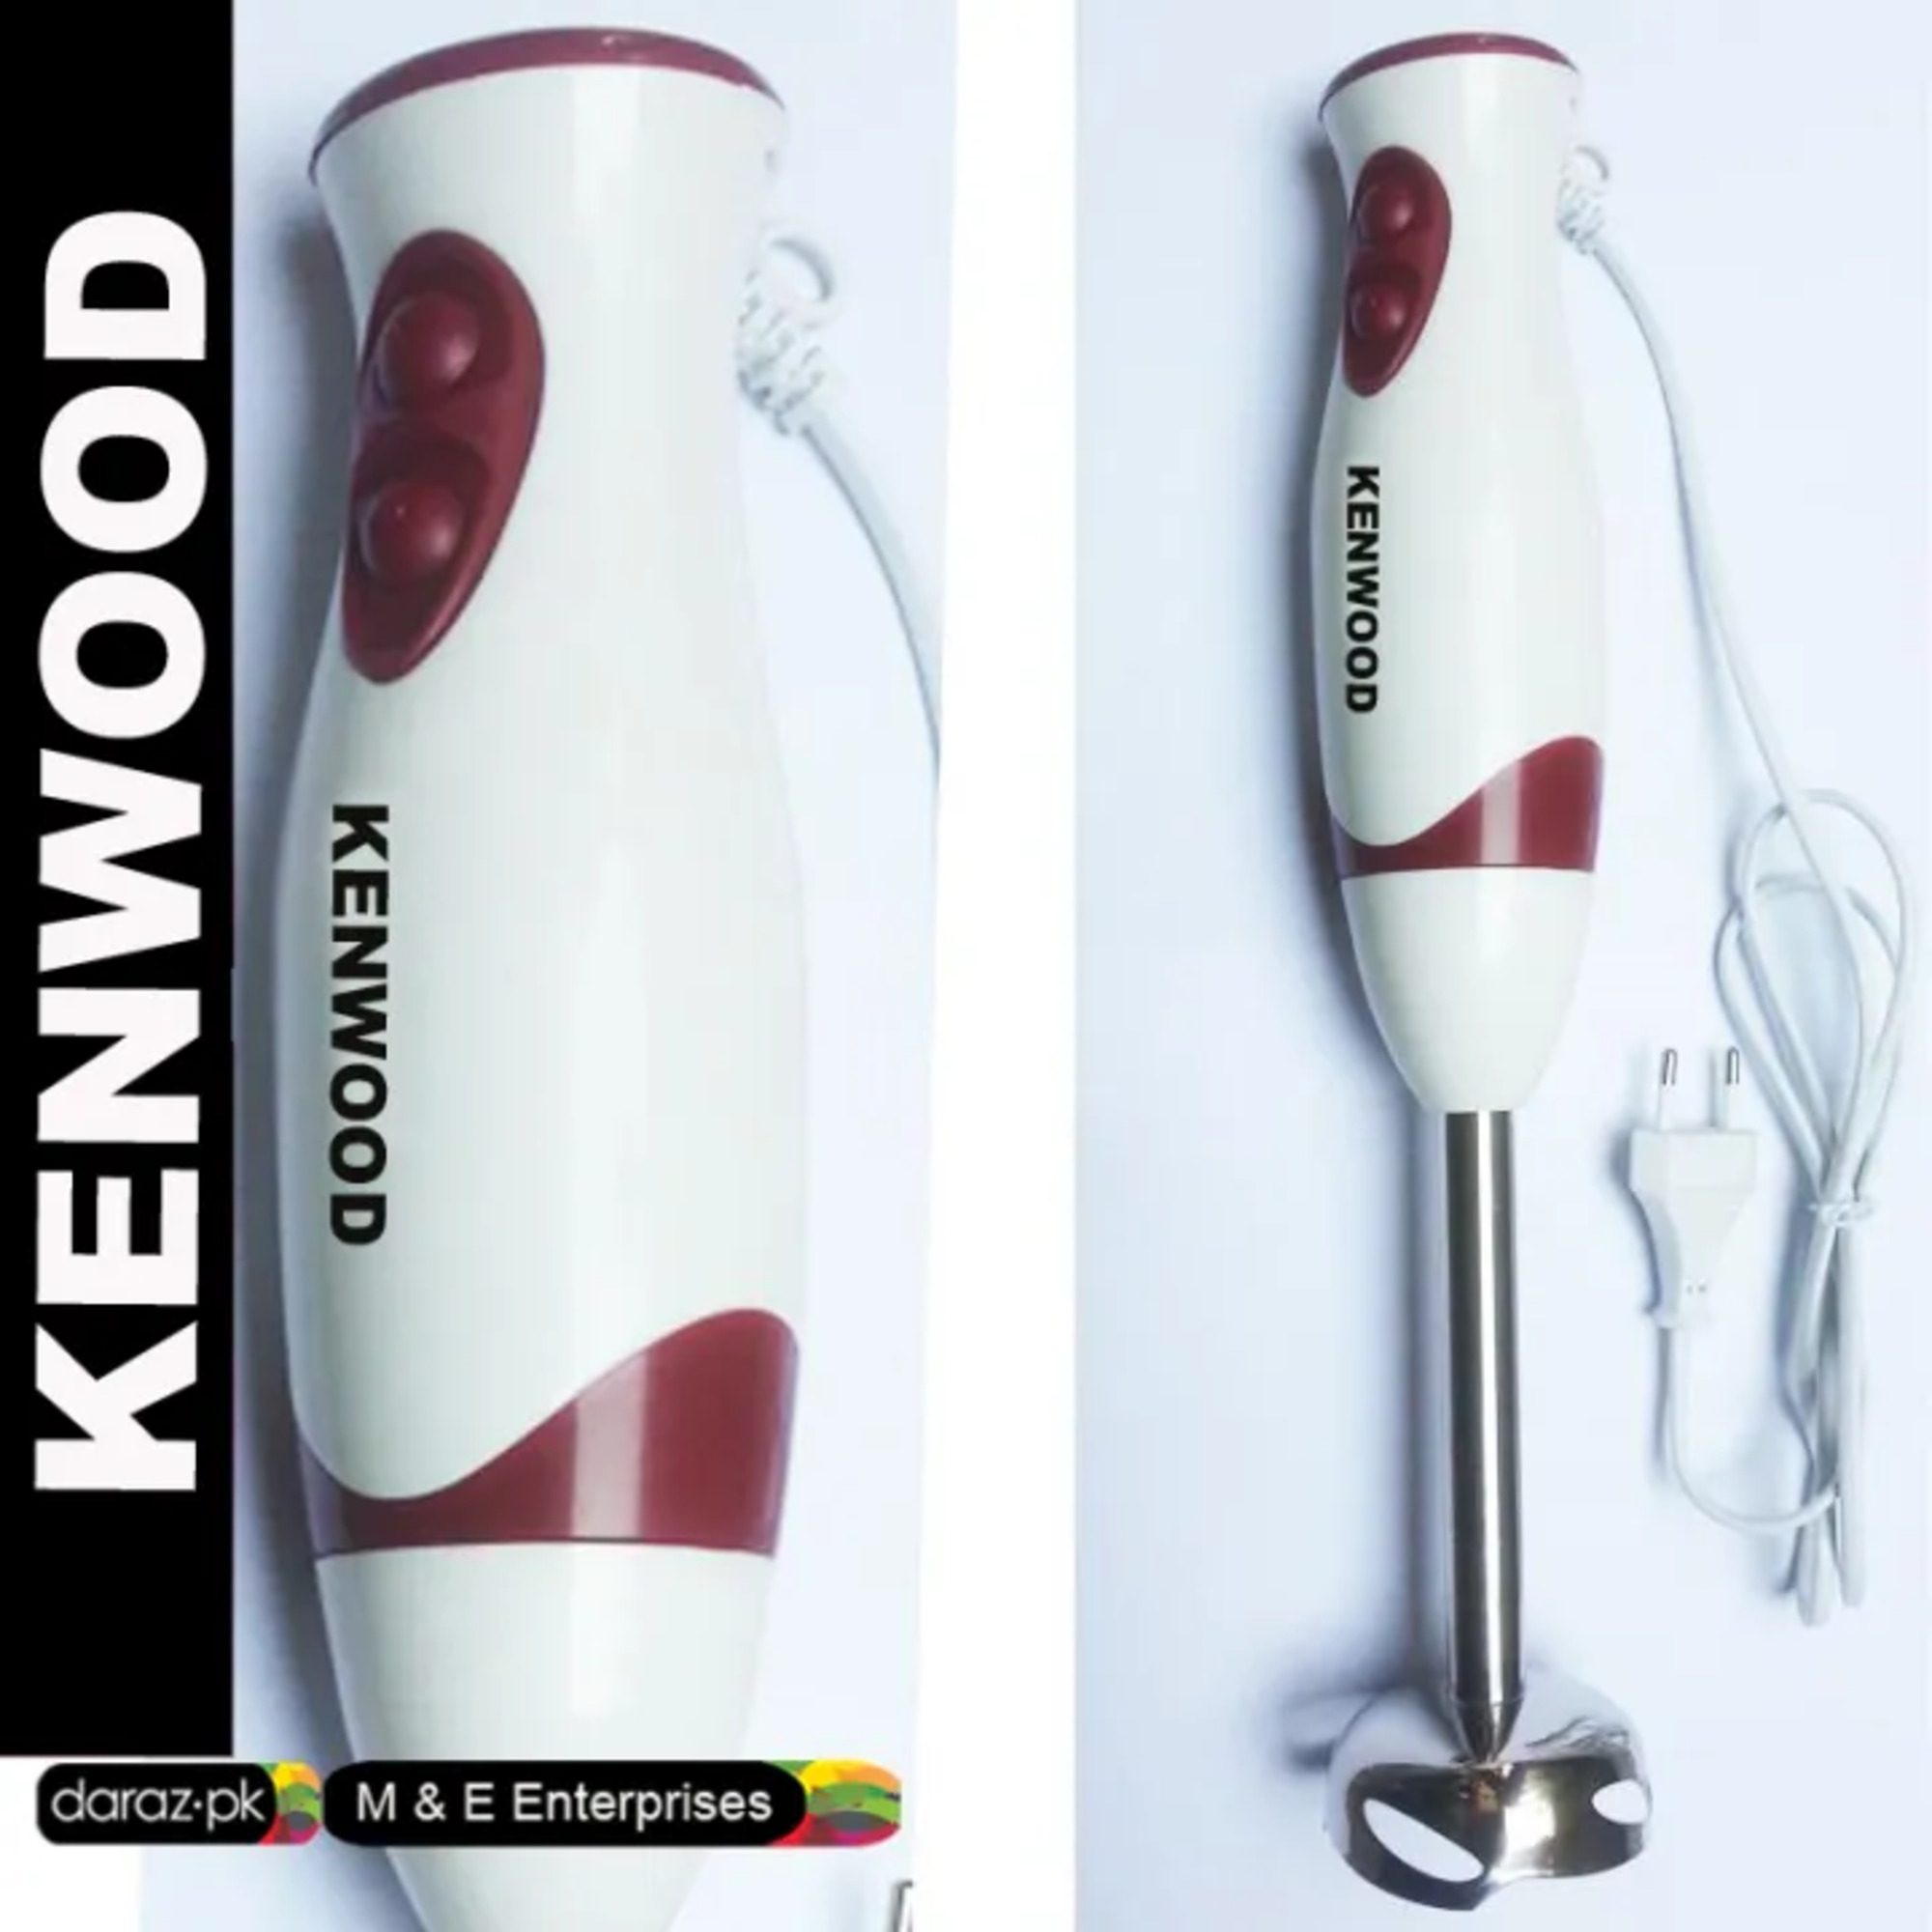 kenwood Mixer Grinder GS-B045